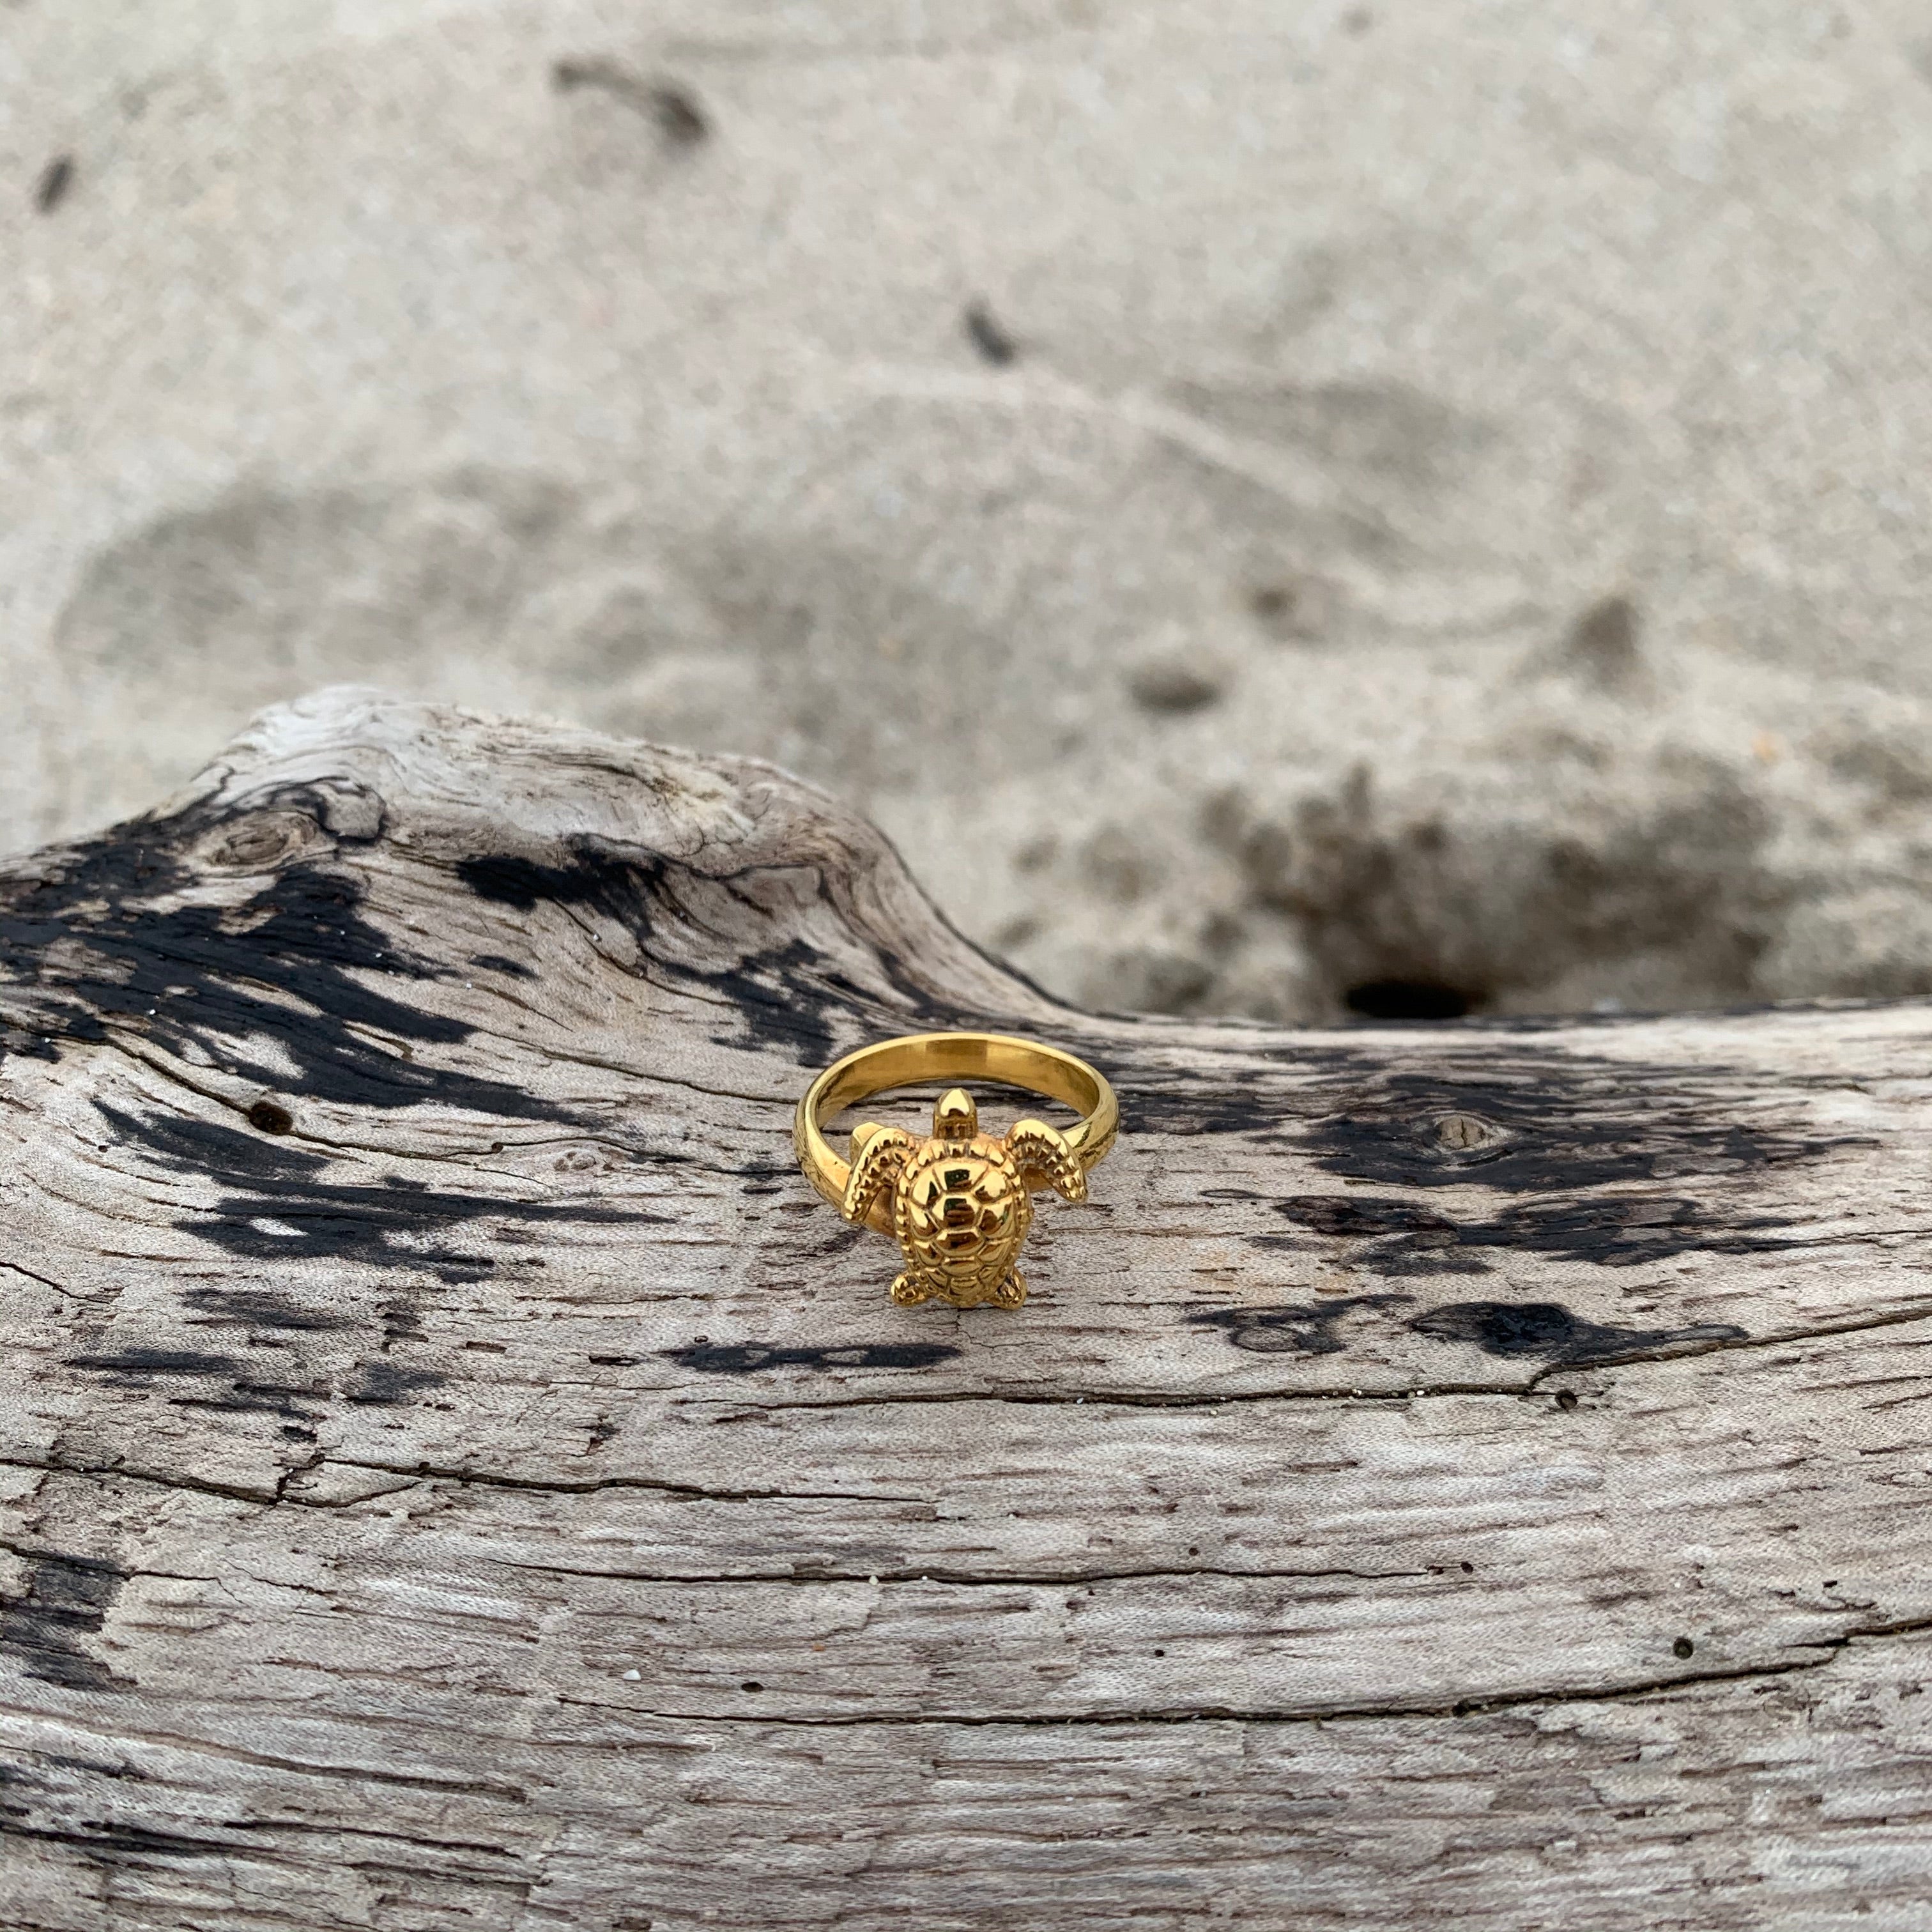 Ring Bronze Sea Turtle-Jenstones Jewelry